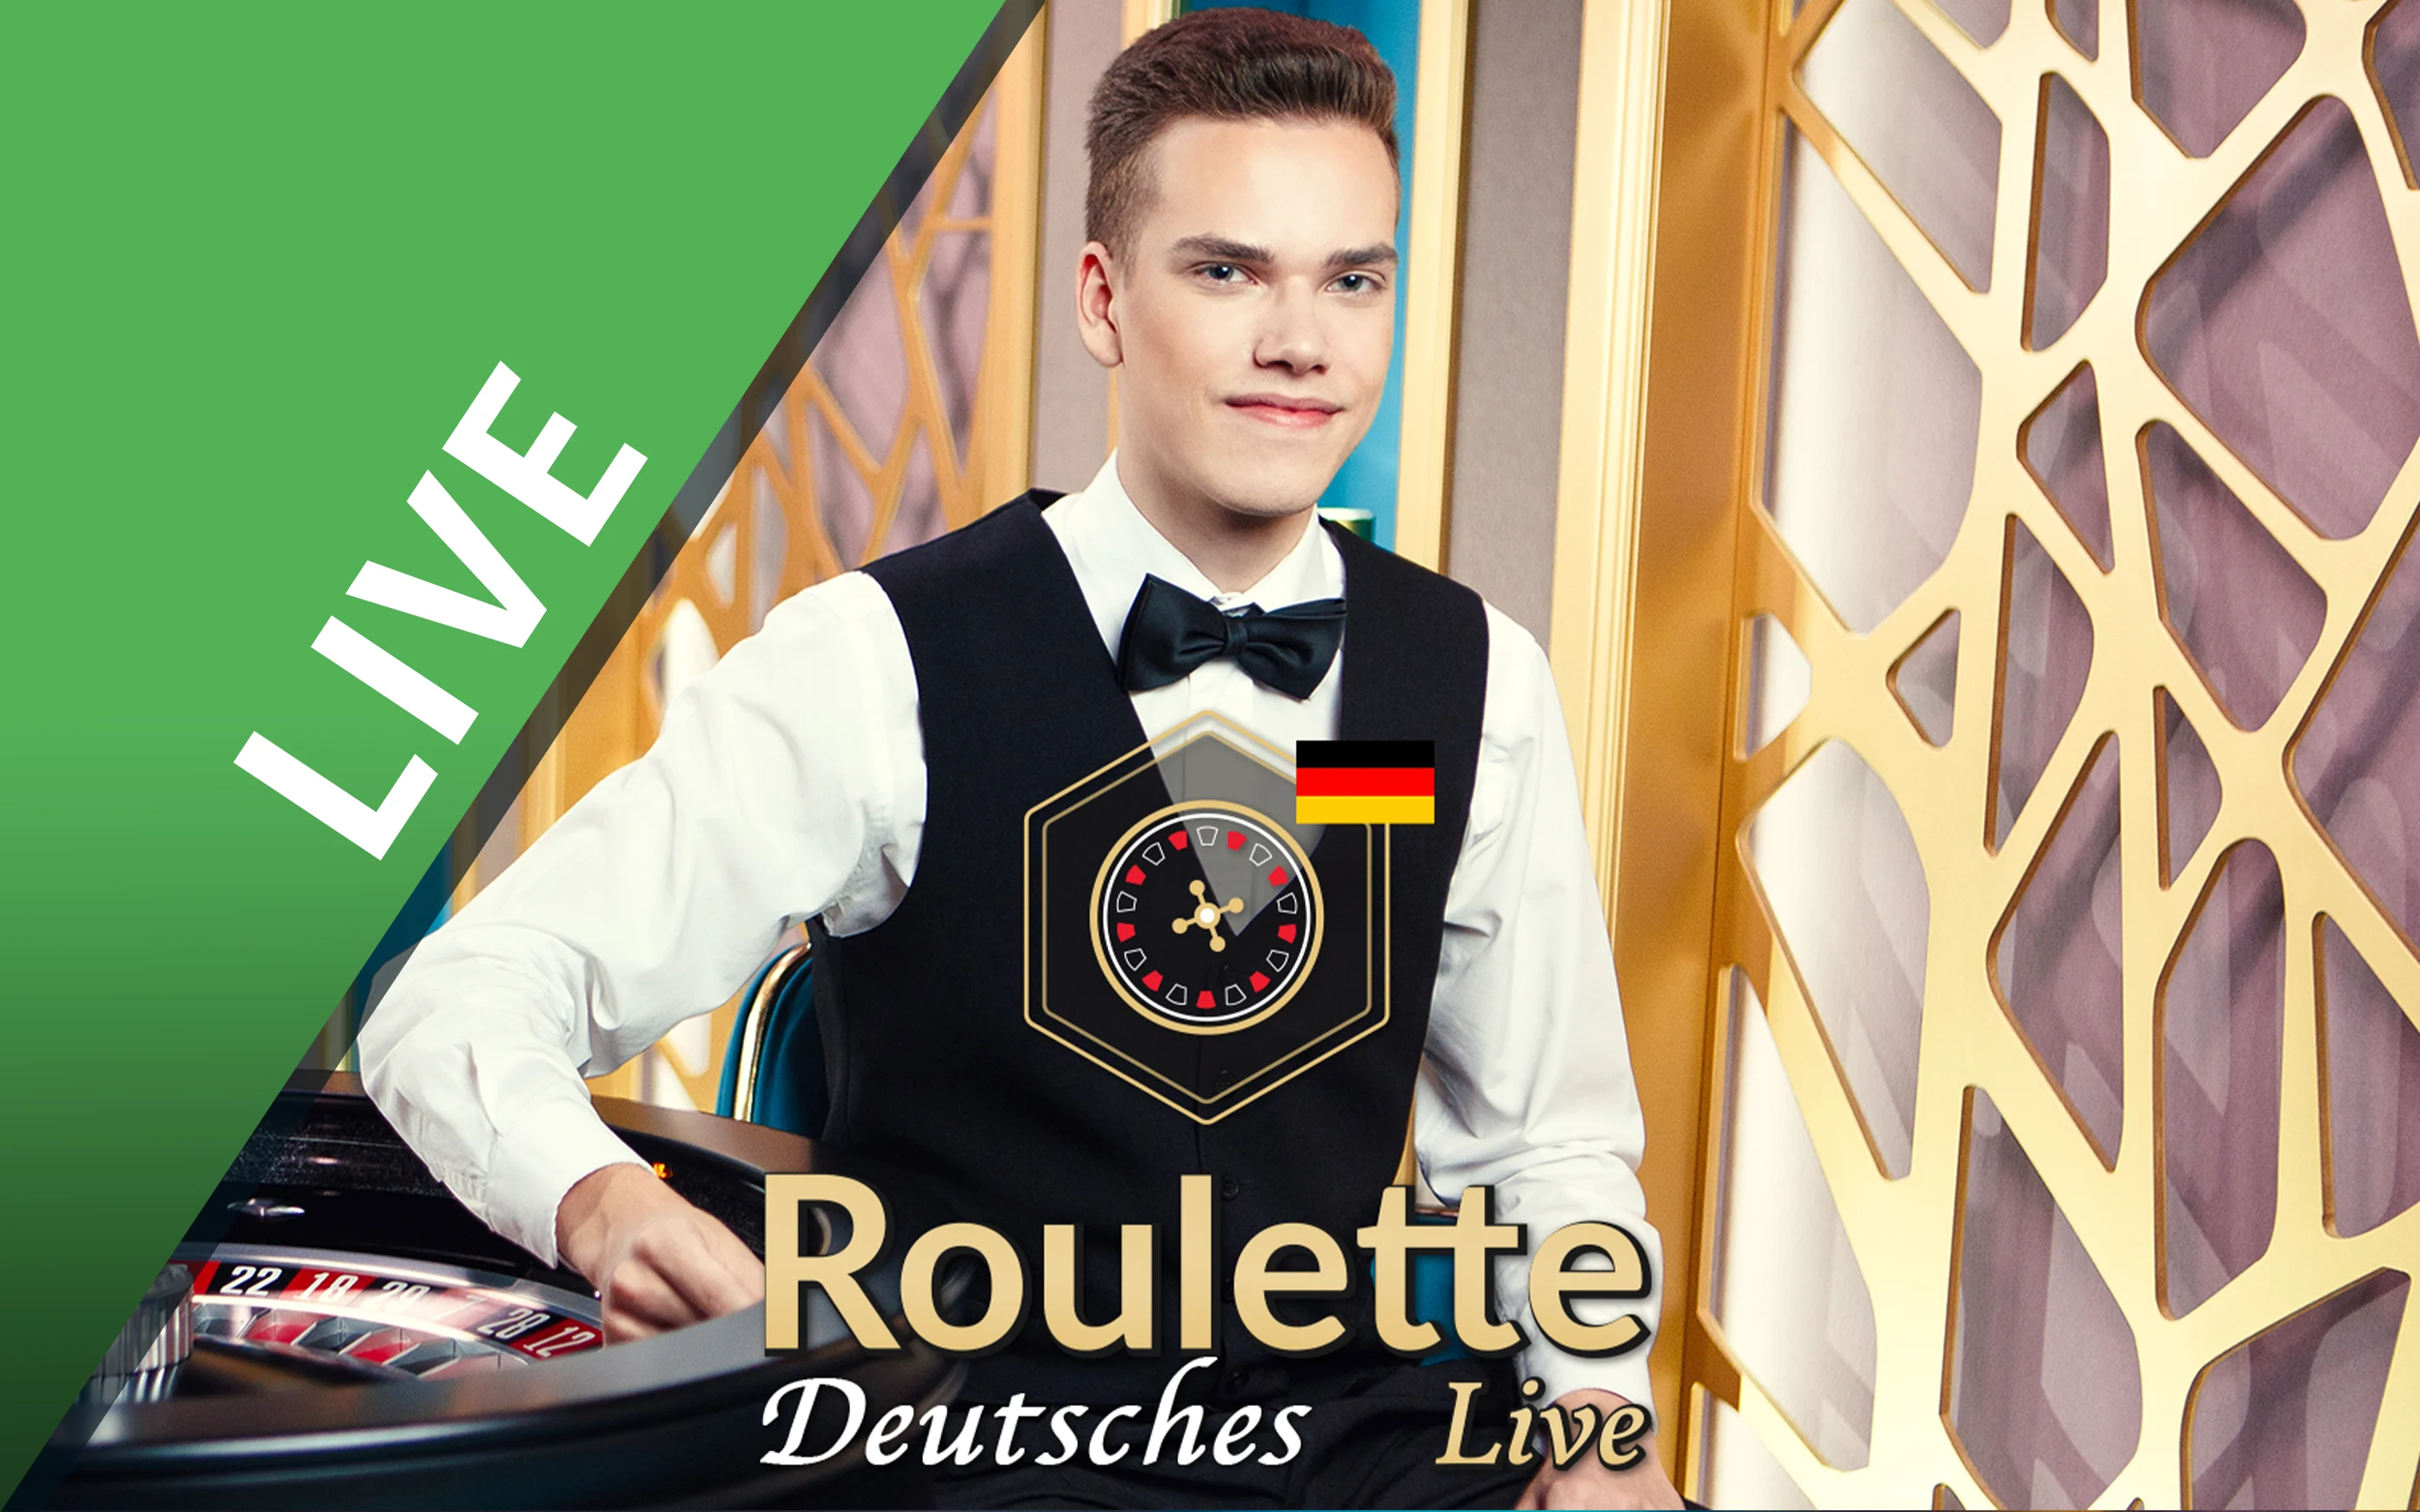 Грайте у Deutsches Roulette в онлайн-казино Starcasino.be